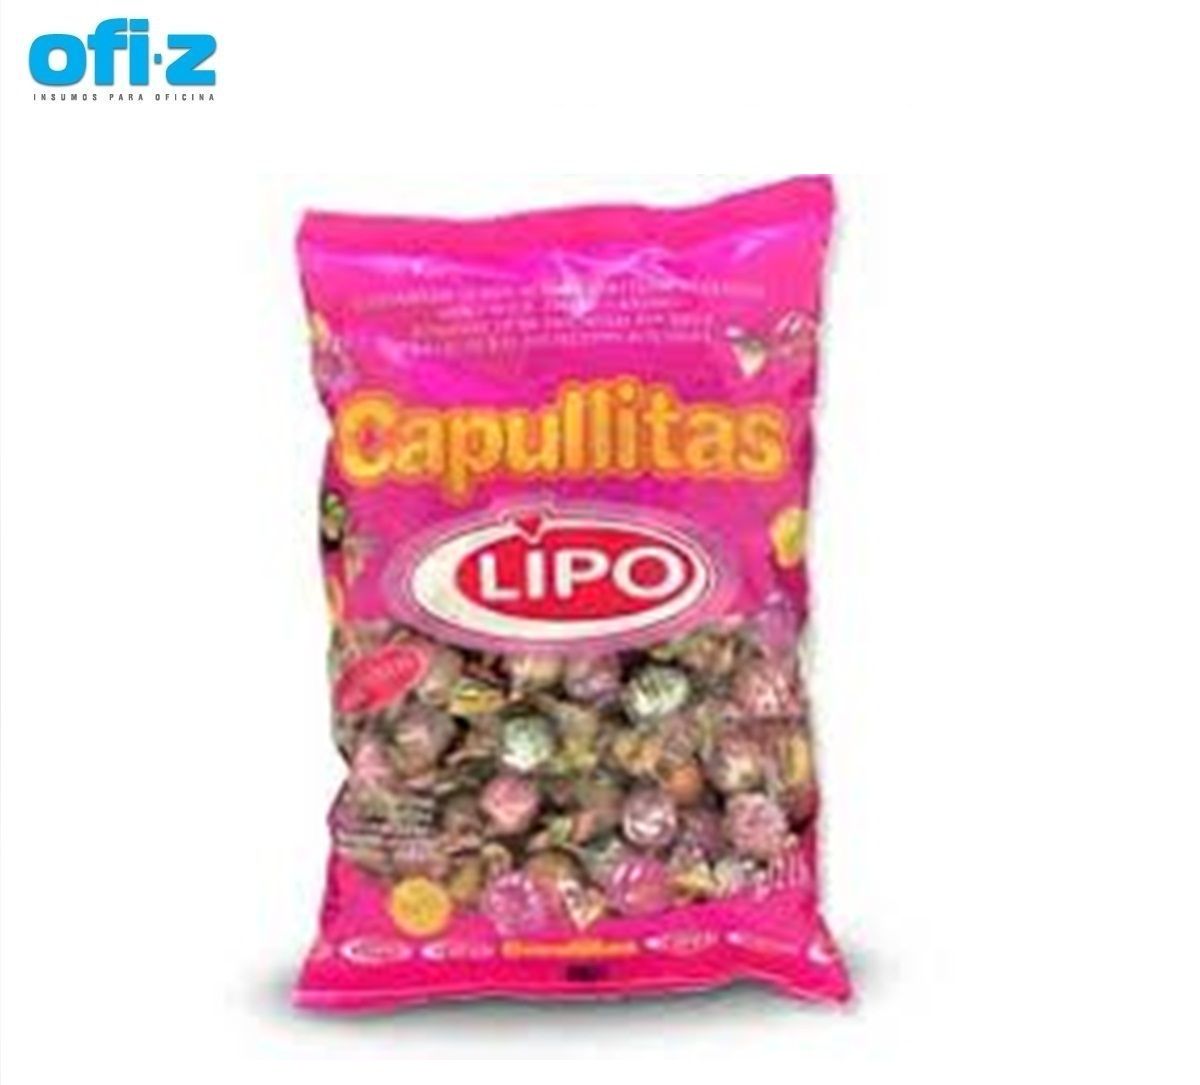 [ELIMINADO] Caramelo Lipo bolitas capullitas 907G